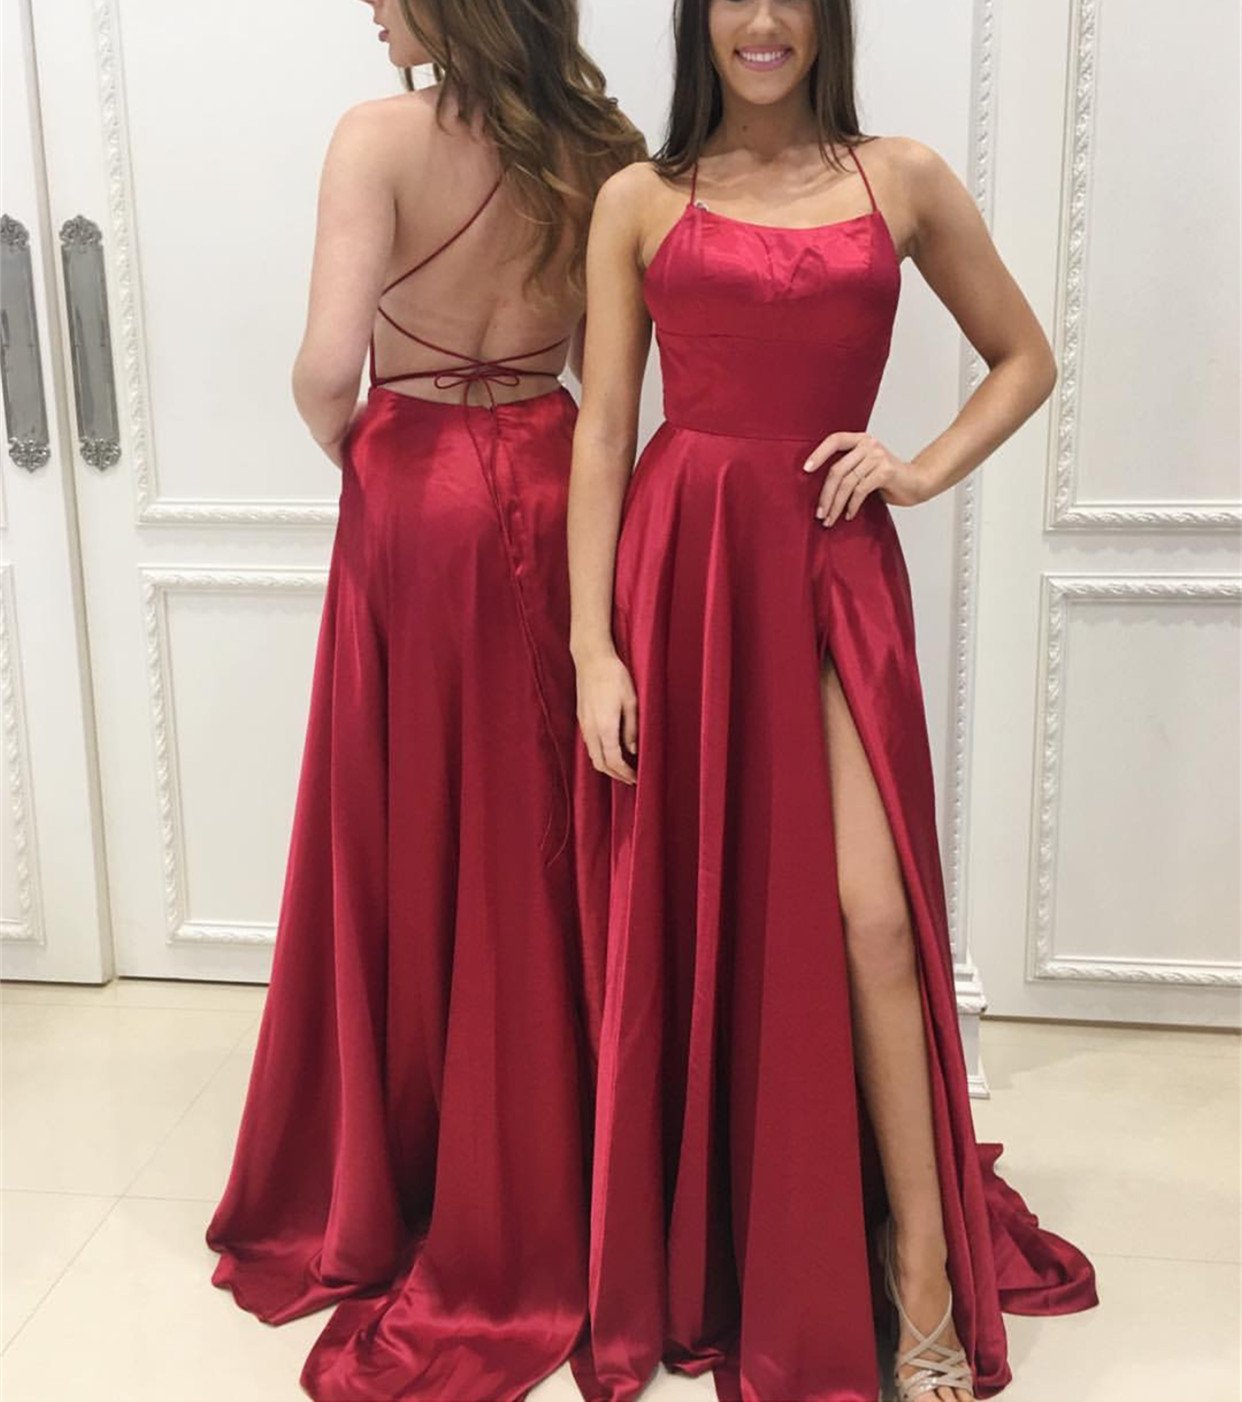 Long Satin Open Back Prom Dresses 2018 Leg Slit Evening Gowns